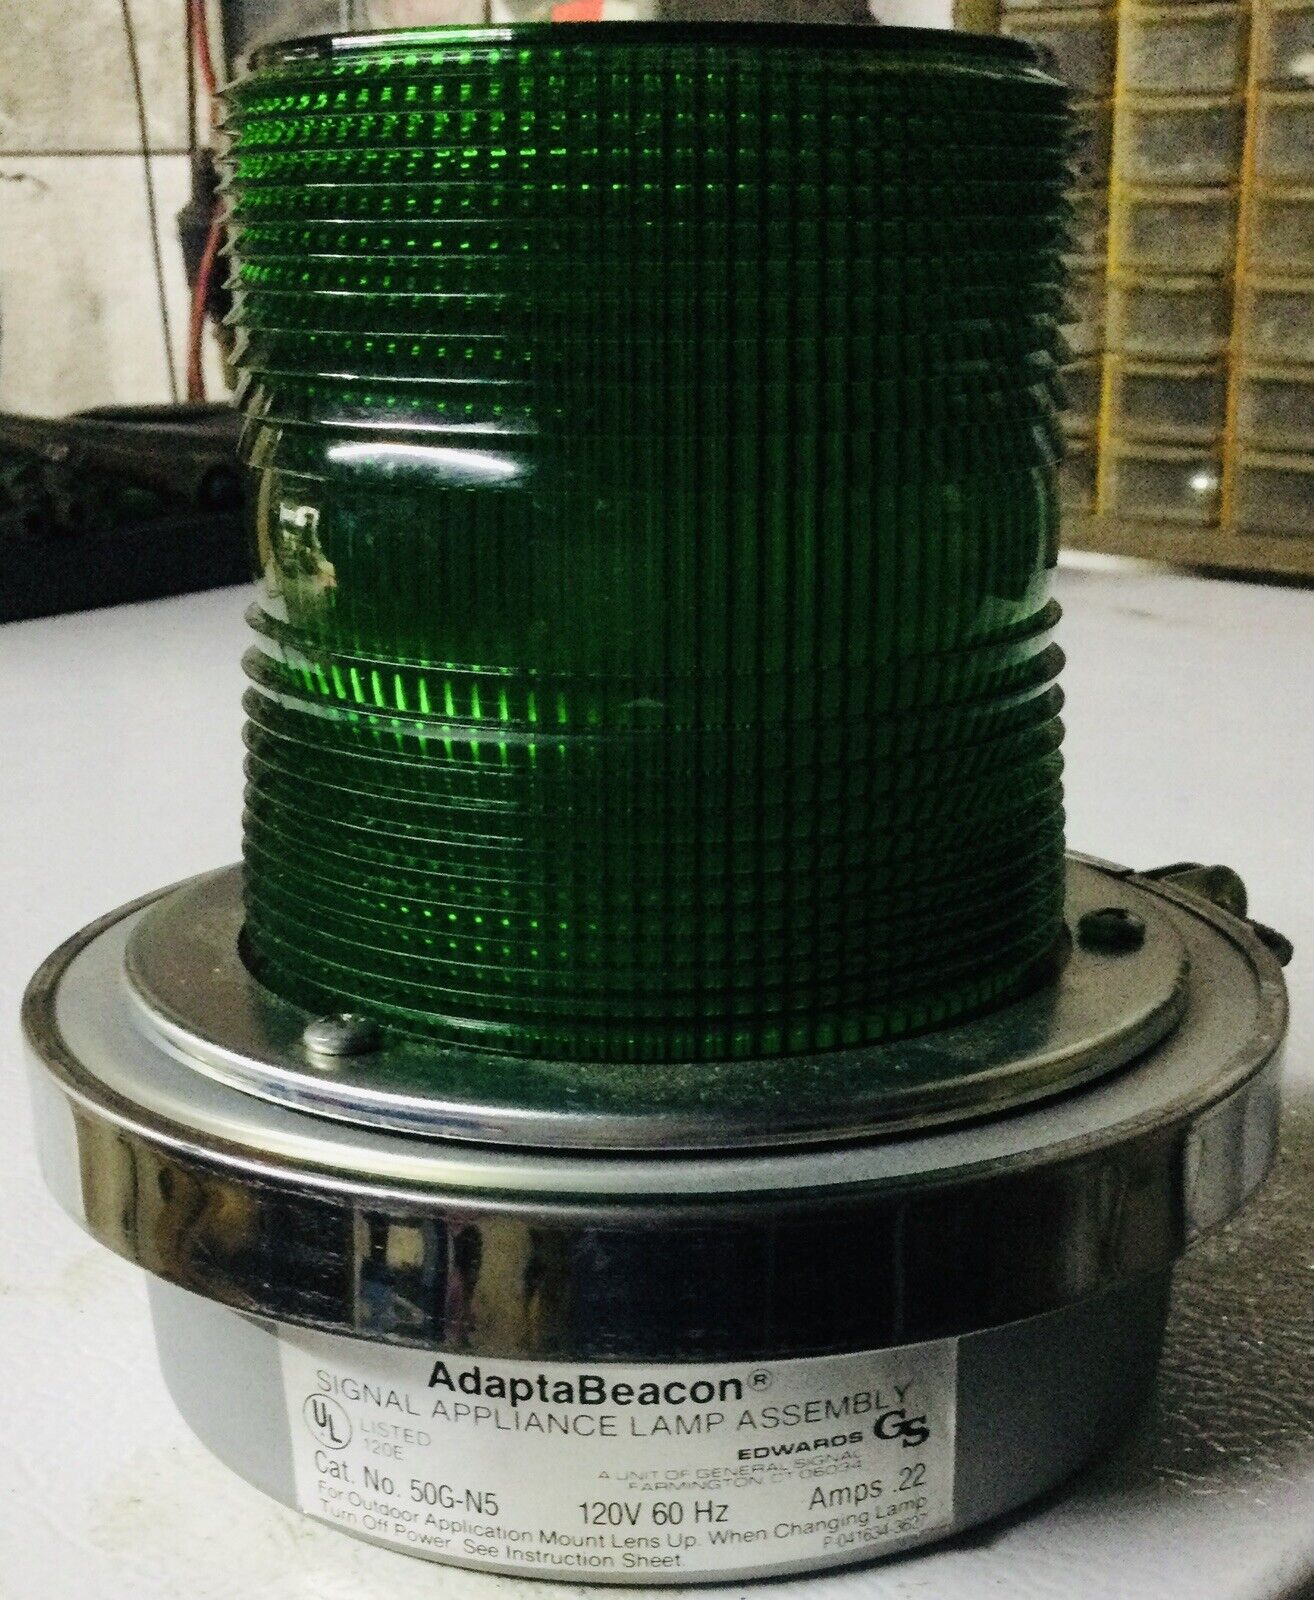 Adaptabeacon Signal Appliance Lamp Assembly (Green) 120V 60Hz